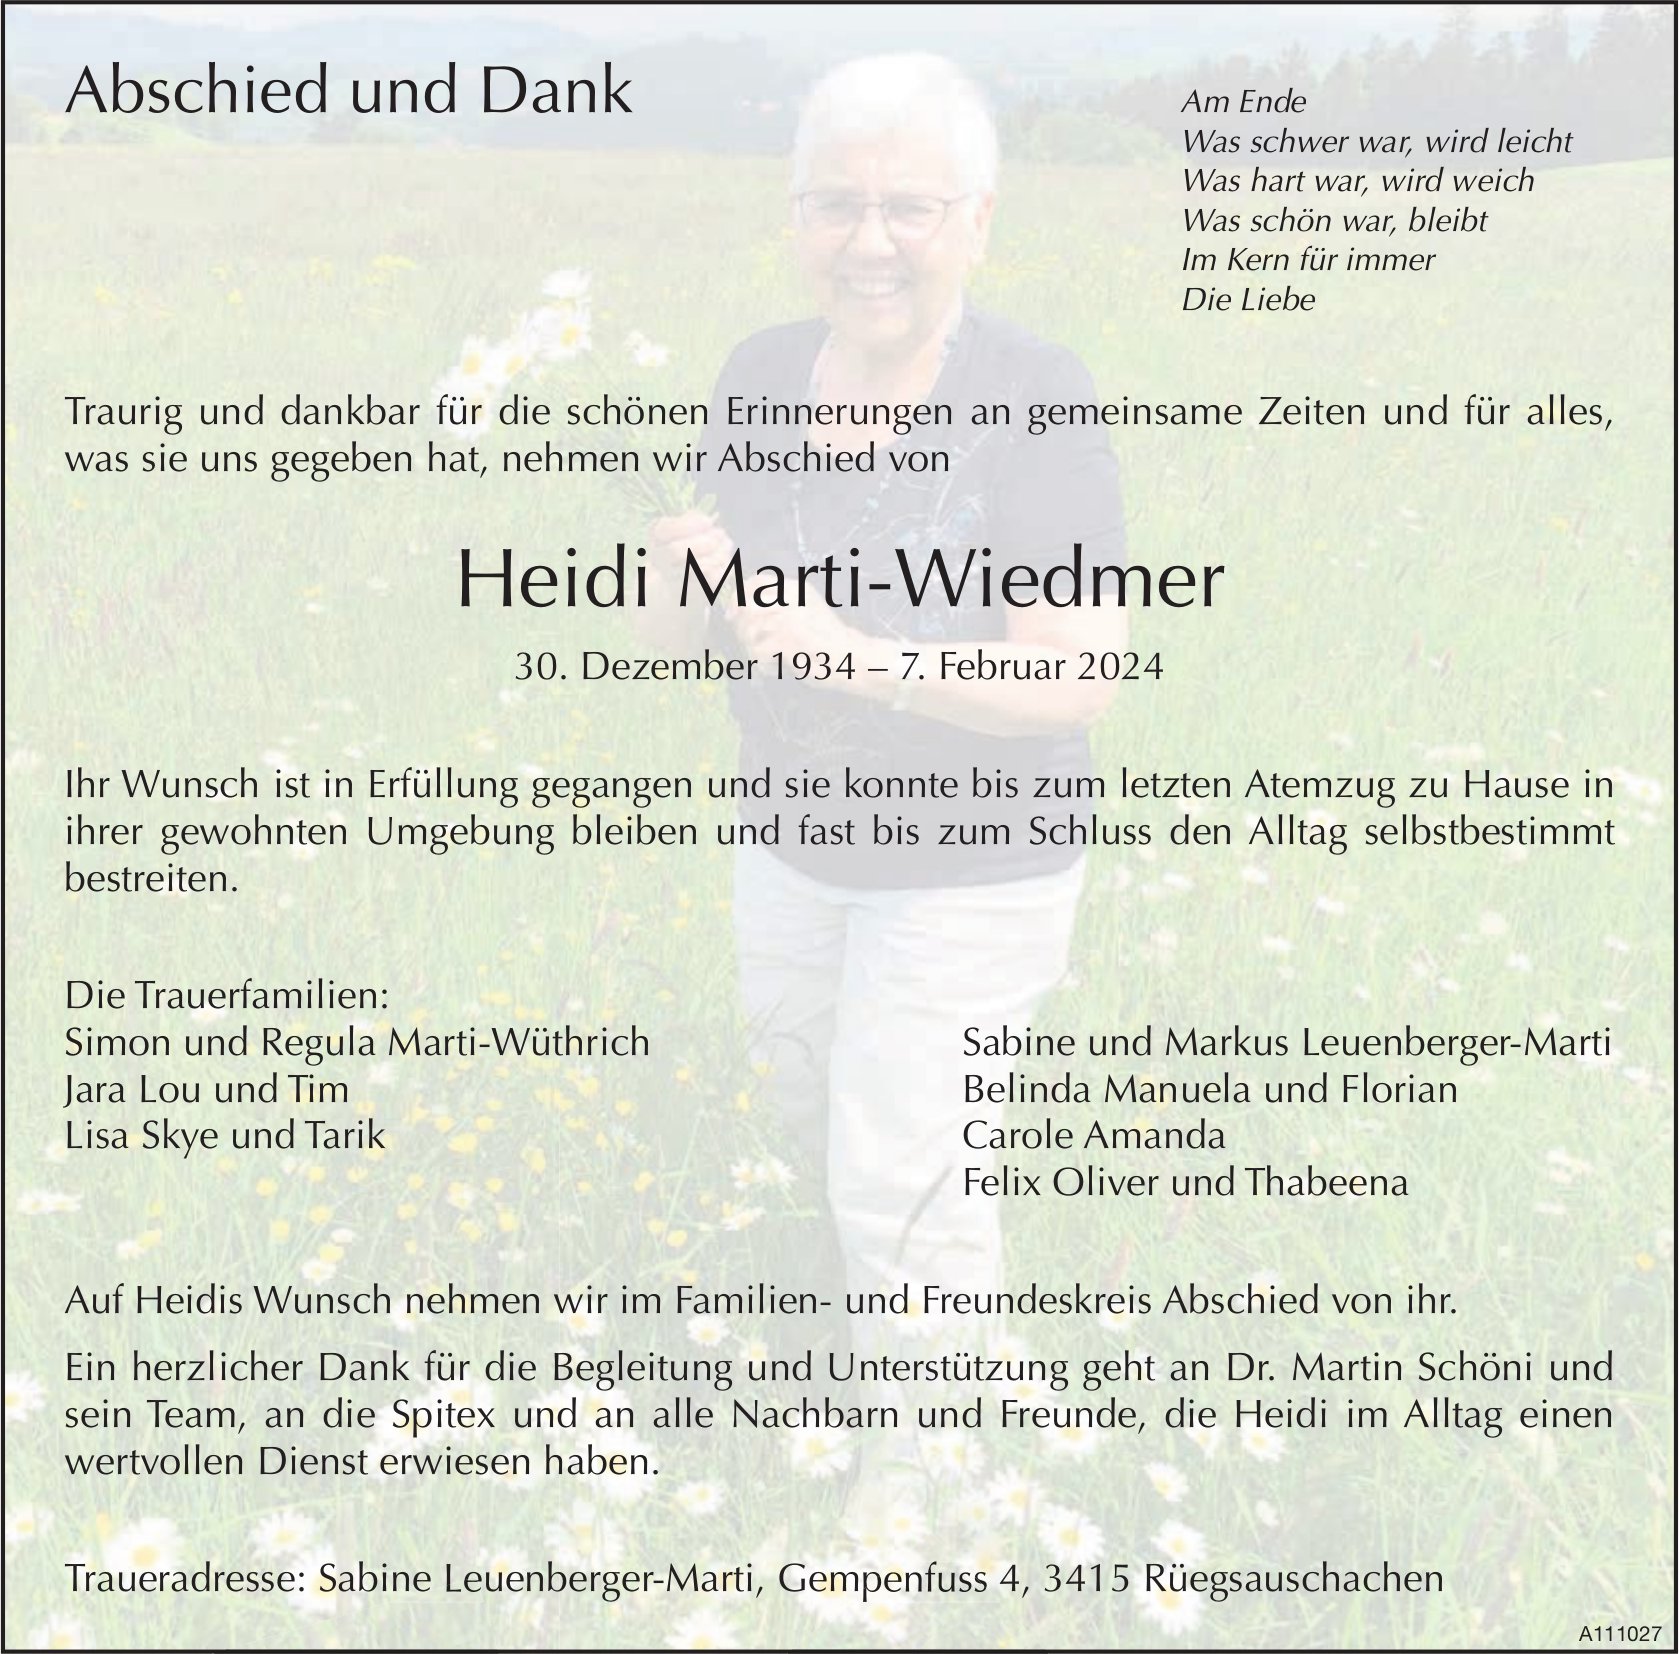 Heidi Marti-Wiedmer, im Februar 2024 / TA + DS